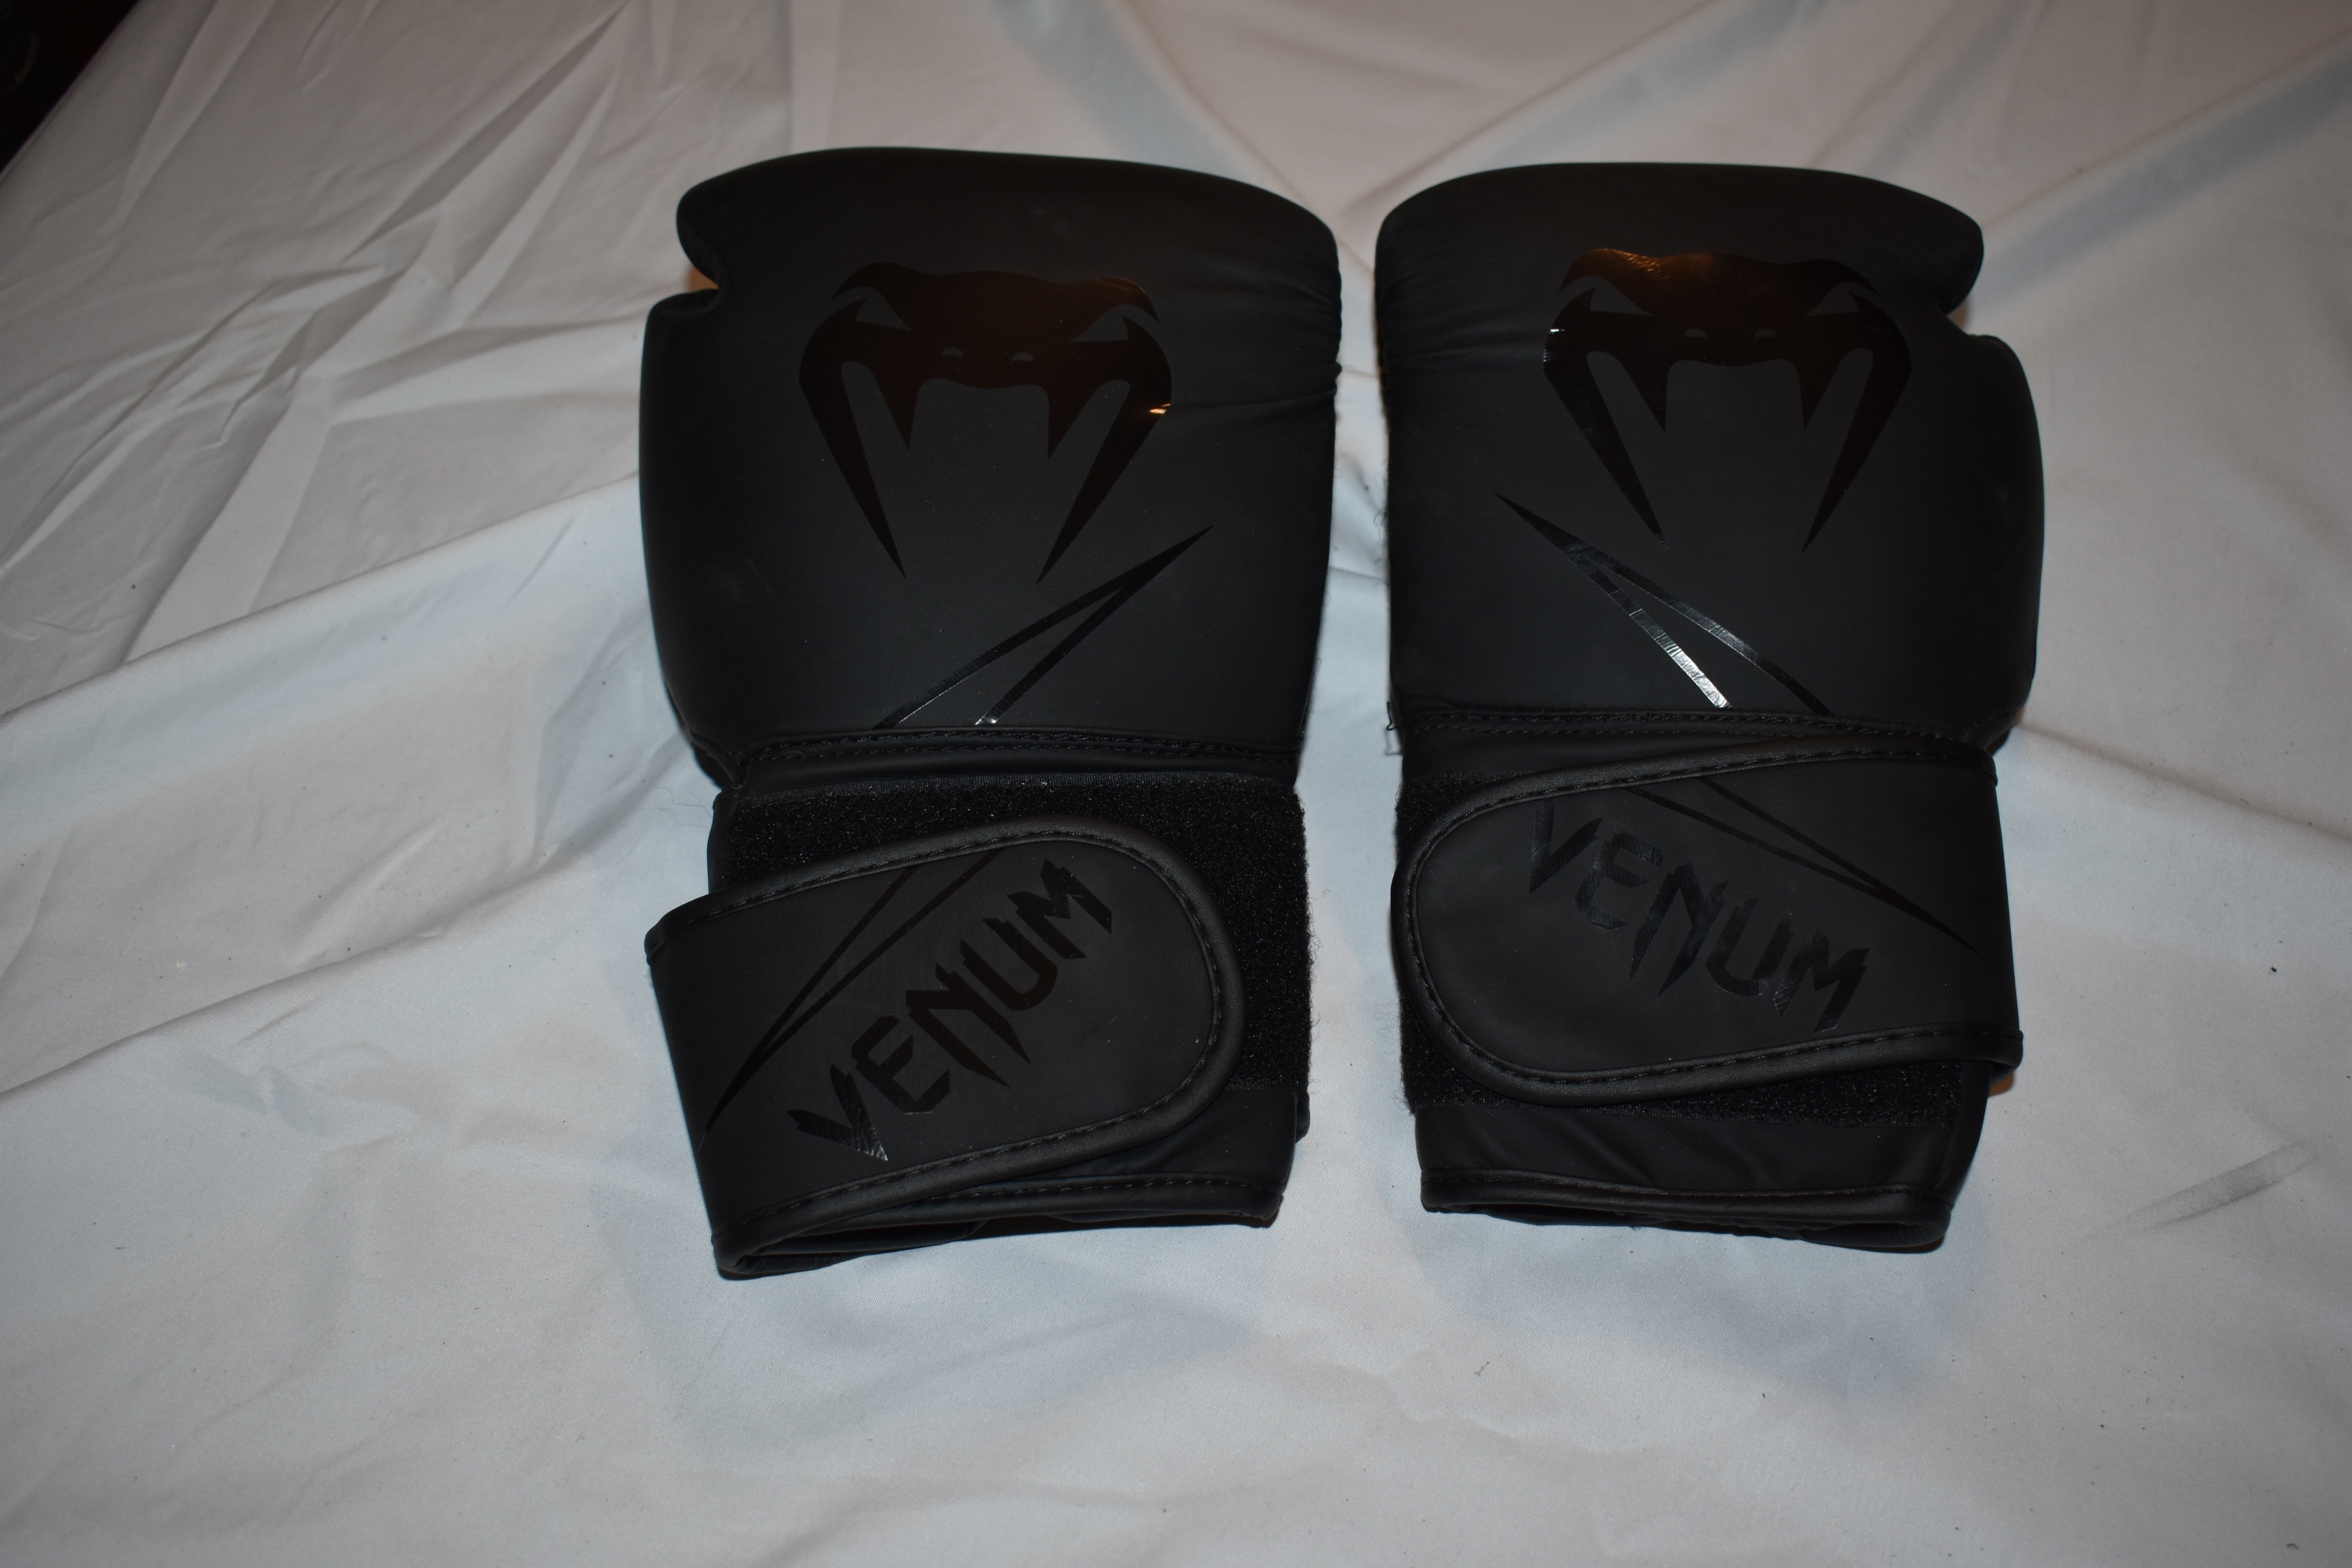 Venom Boxing Gloves, Black, 16oz - Great Condition!